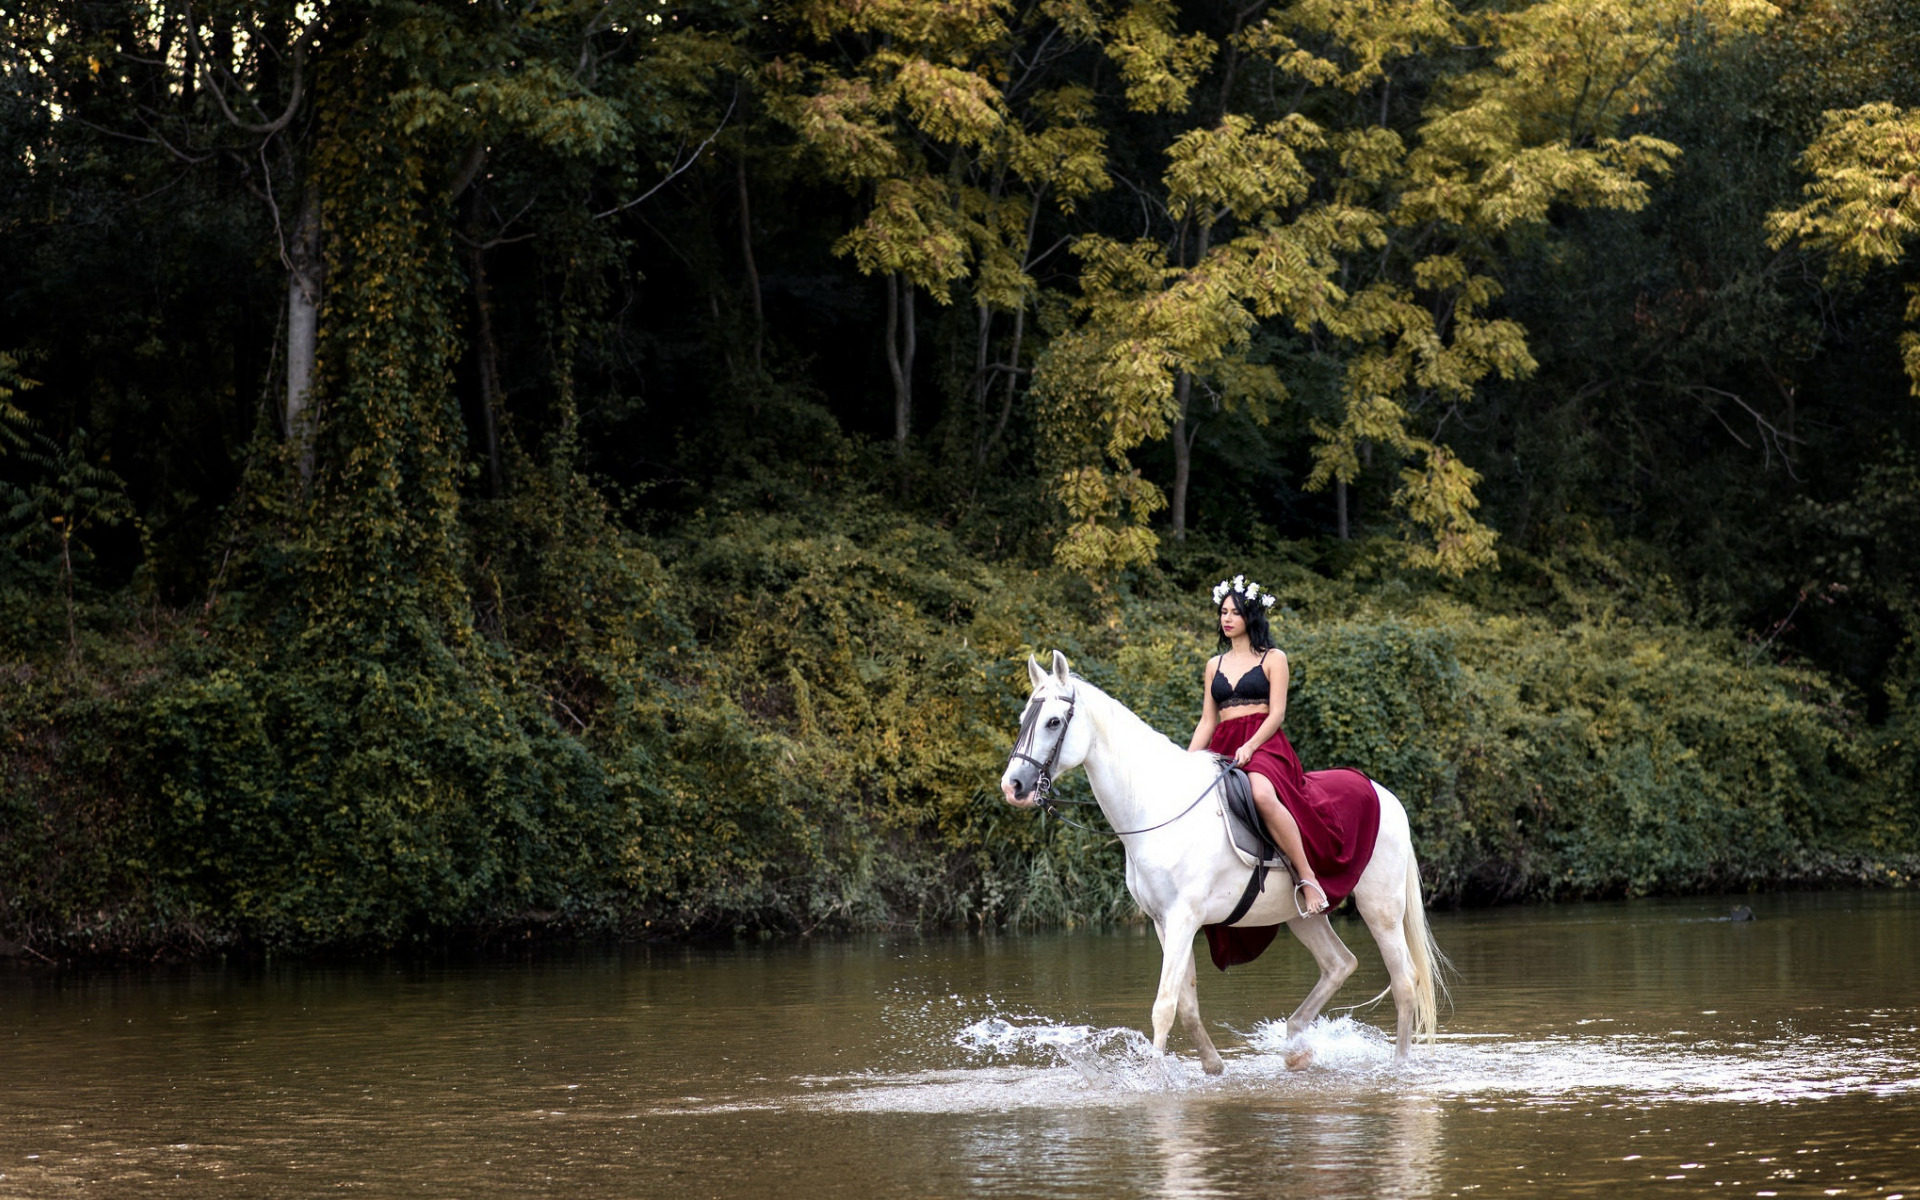 Над верхом. Прогулка на лошадях. Фотосессия с лошадью в воде. Верхом на лошади. Девушка на коне в реке.